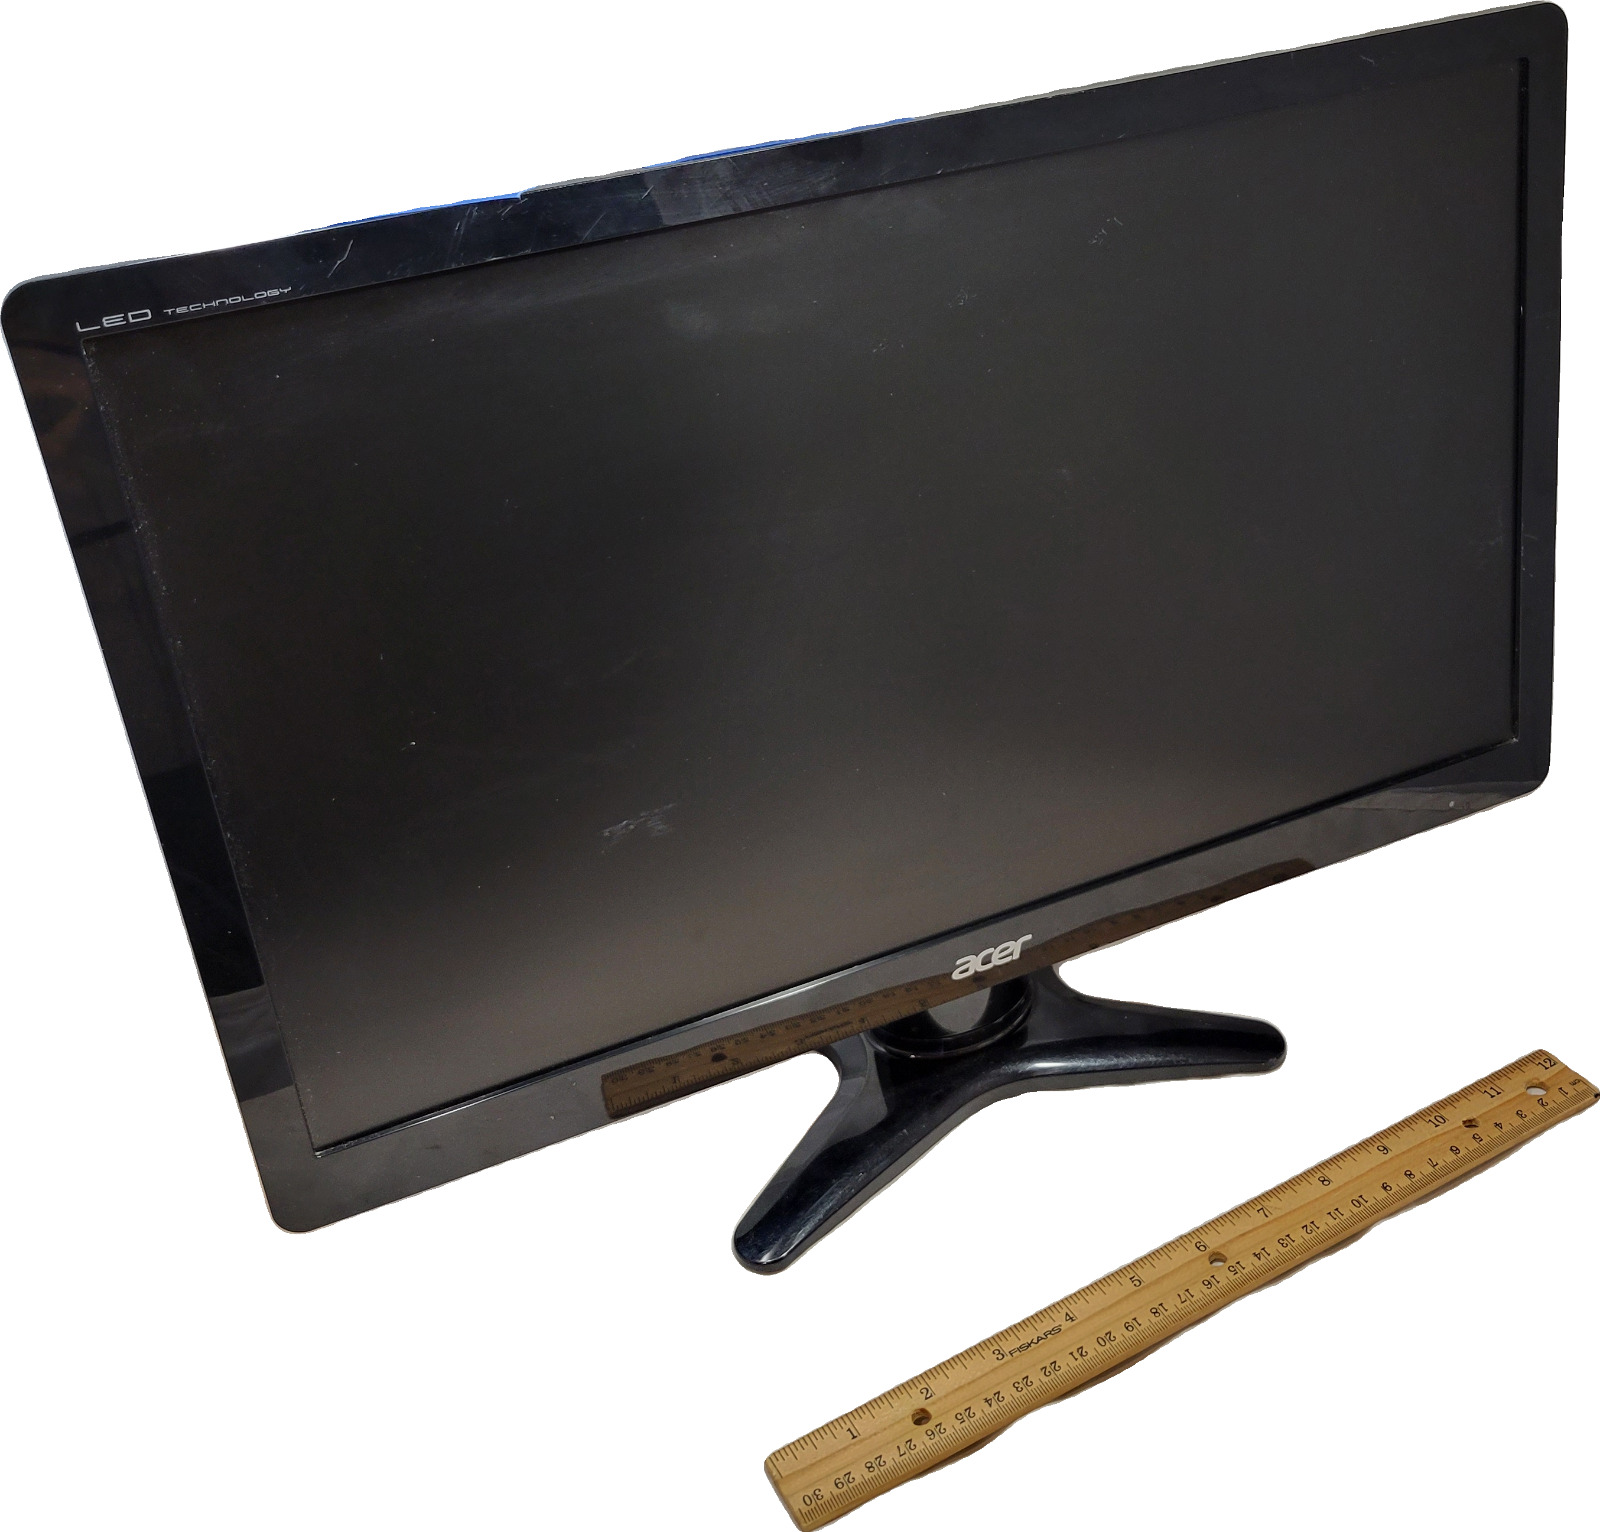 ACER G206HL Widescreen LCD Monitor DVI VGA 1440 x 900 20" Diagonal